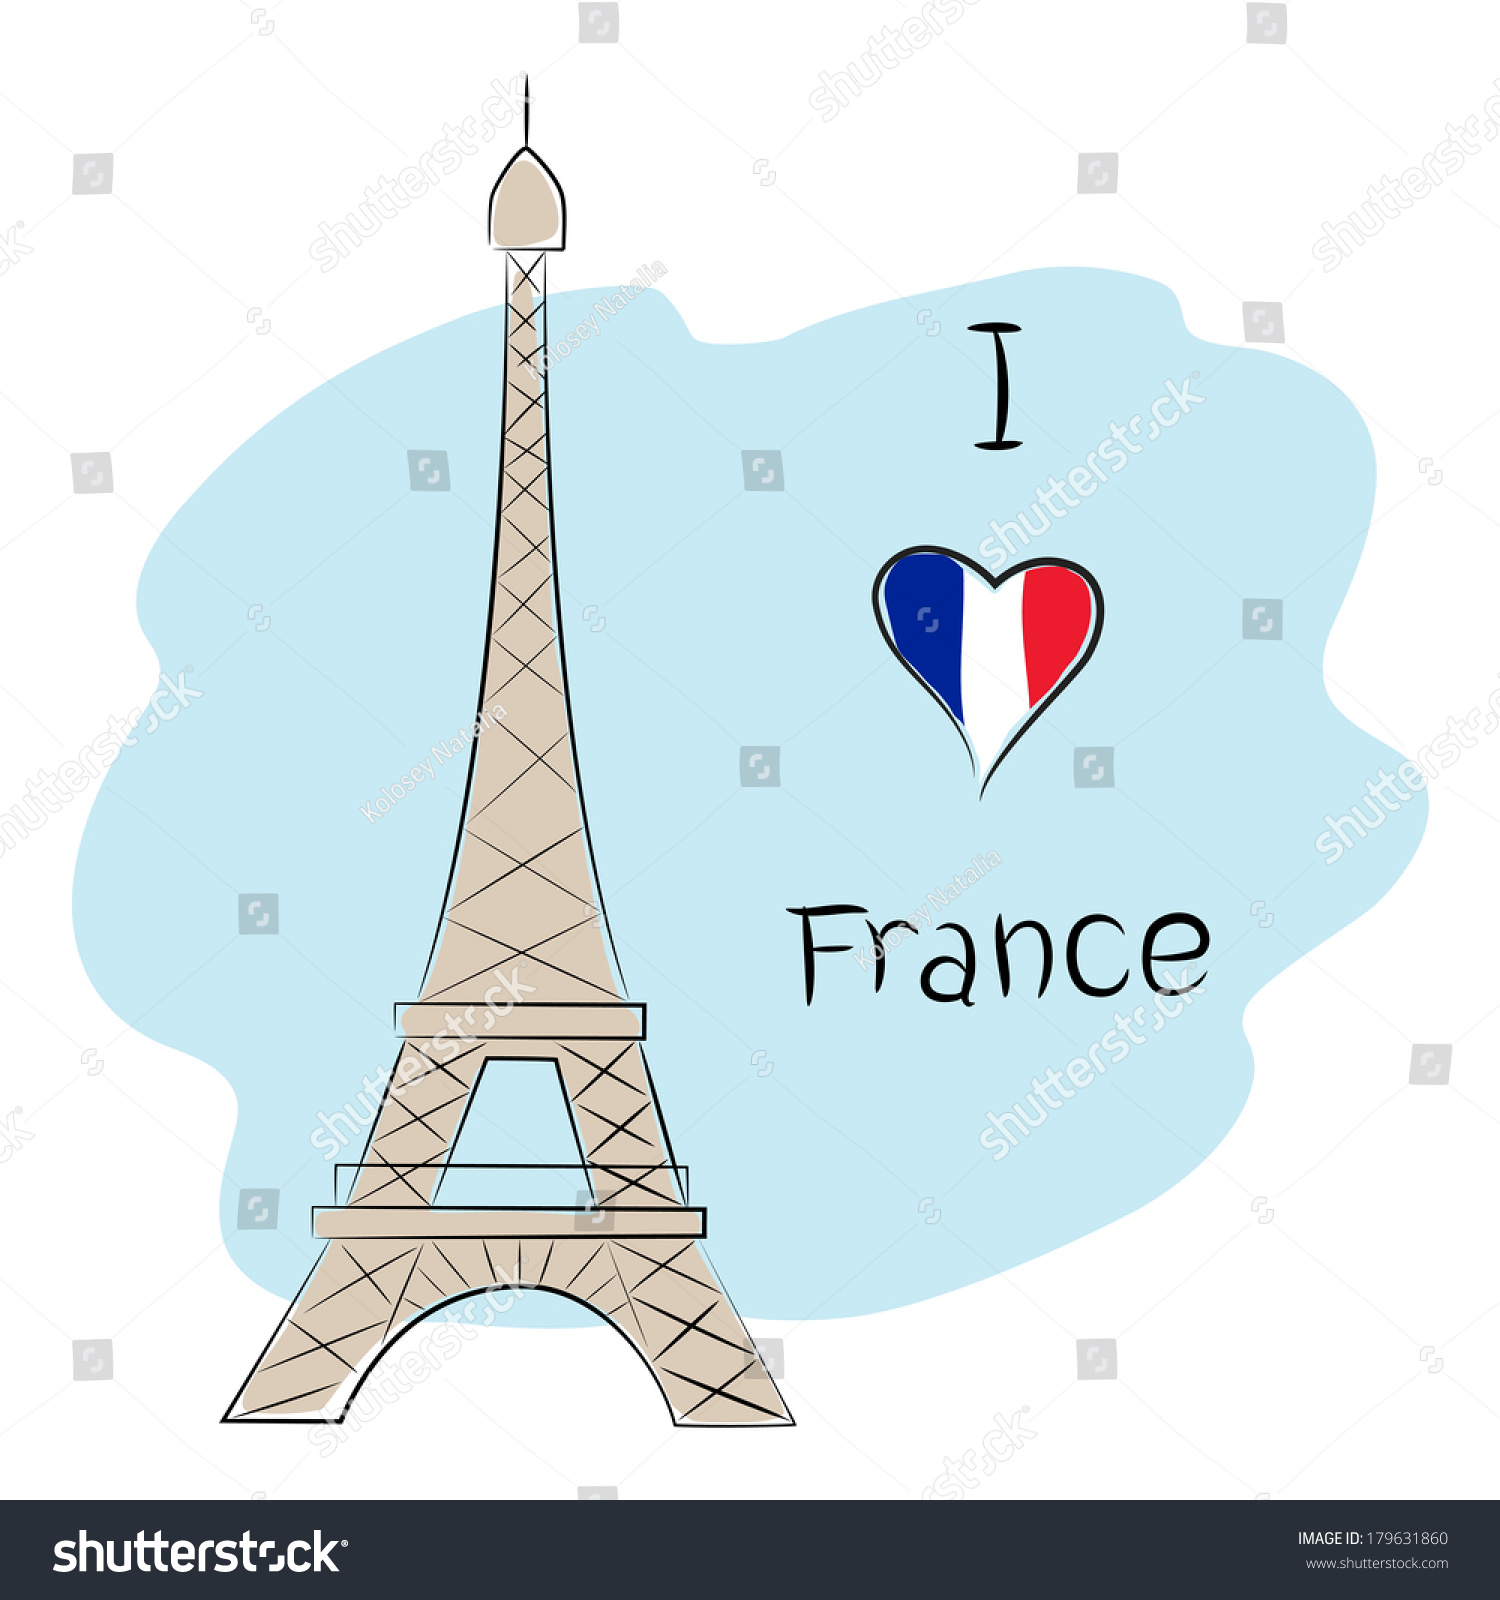 Франция на французском языке